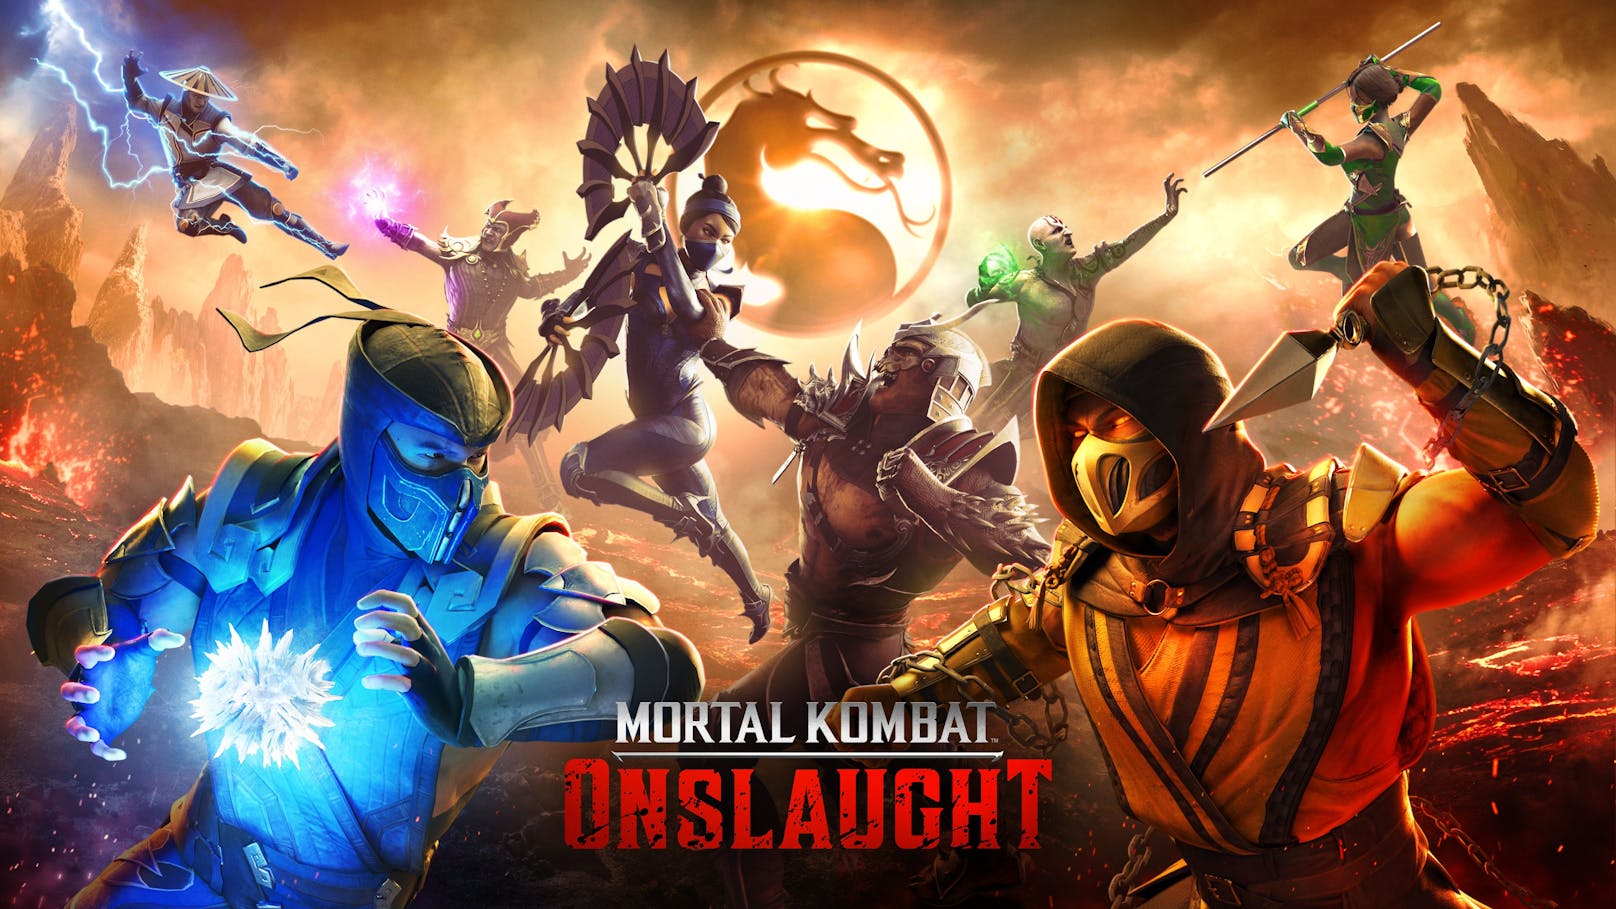 "Mortal Kombat: Onslaught" prügelt jetzt auf Handys